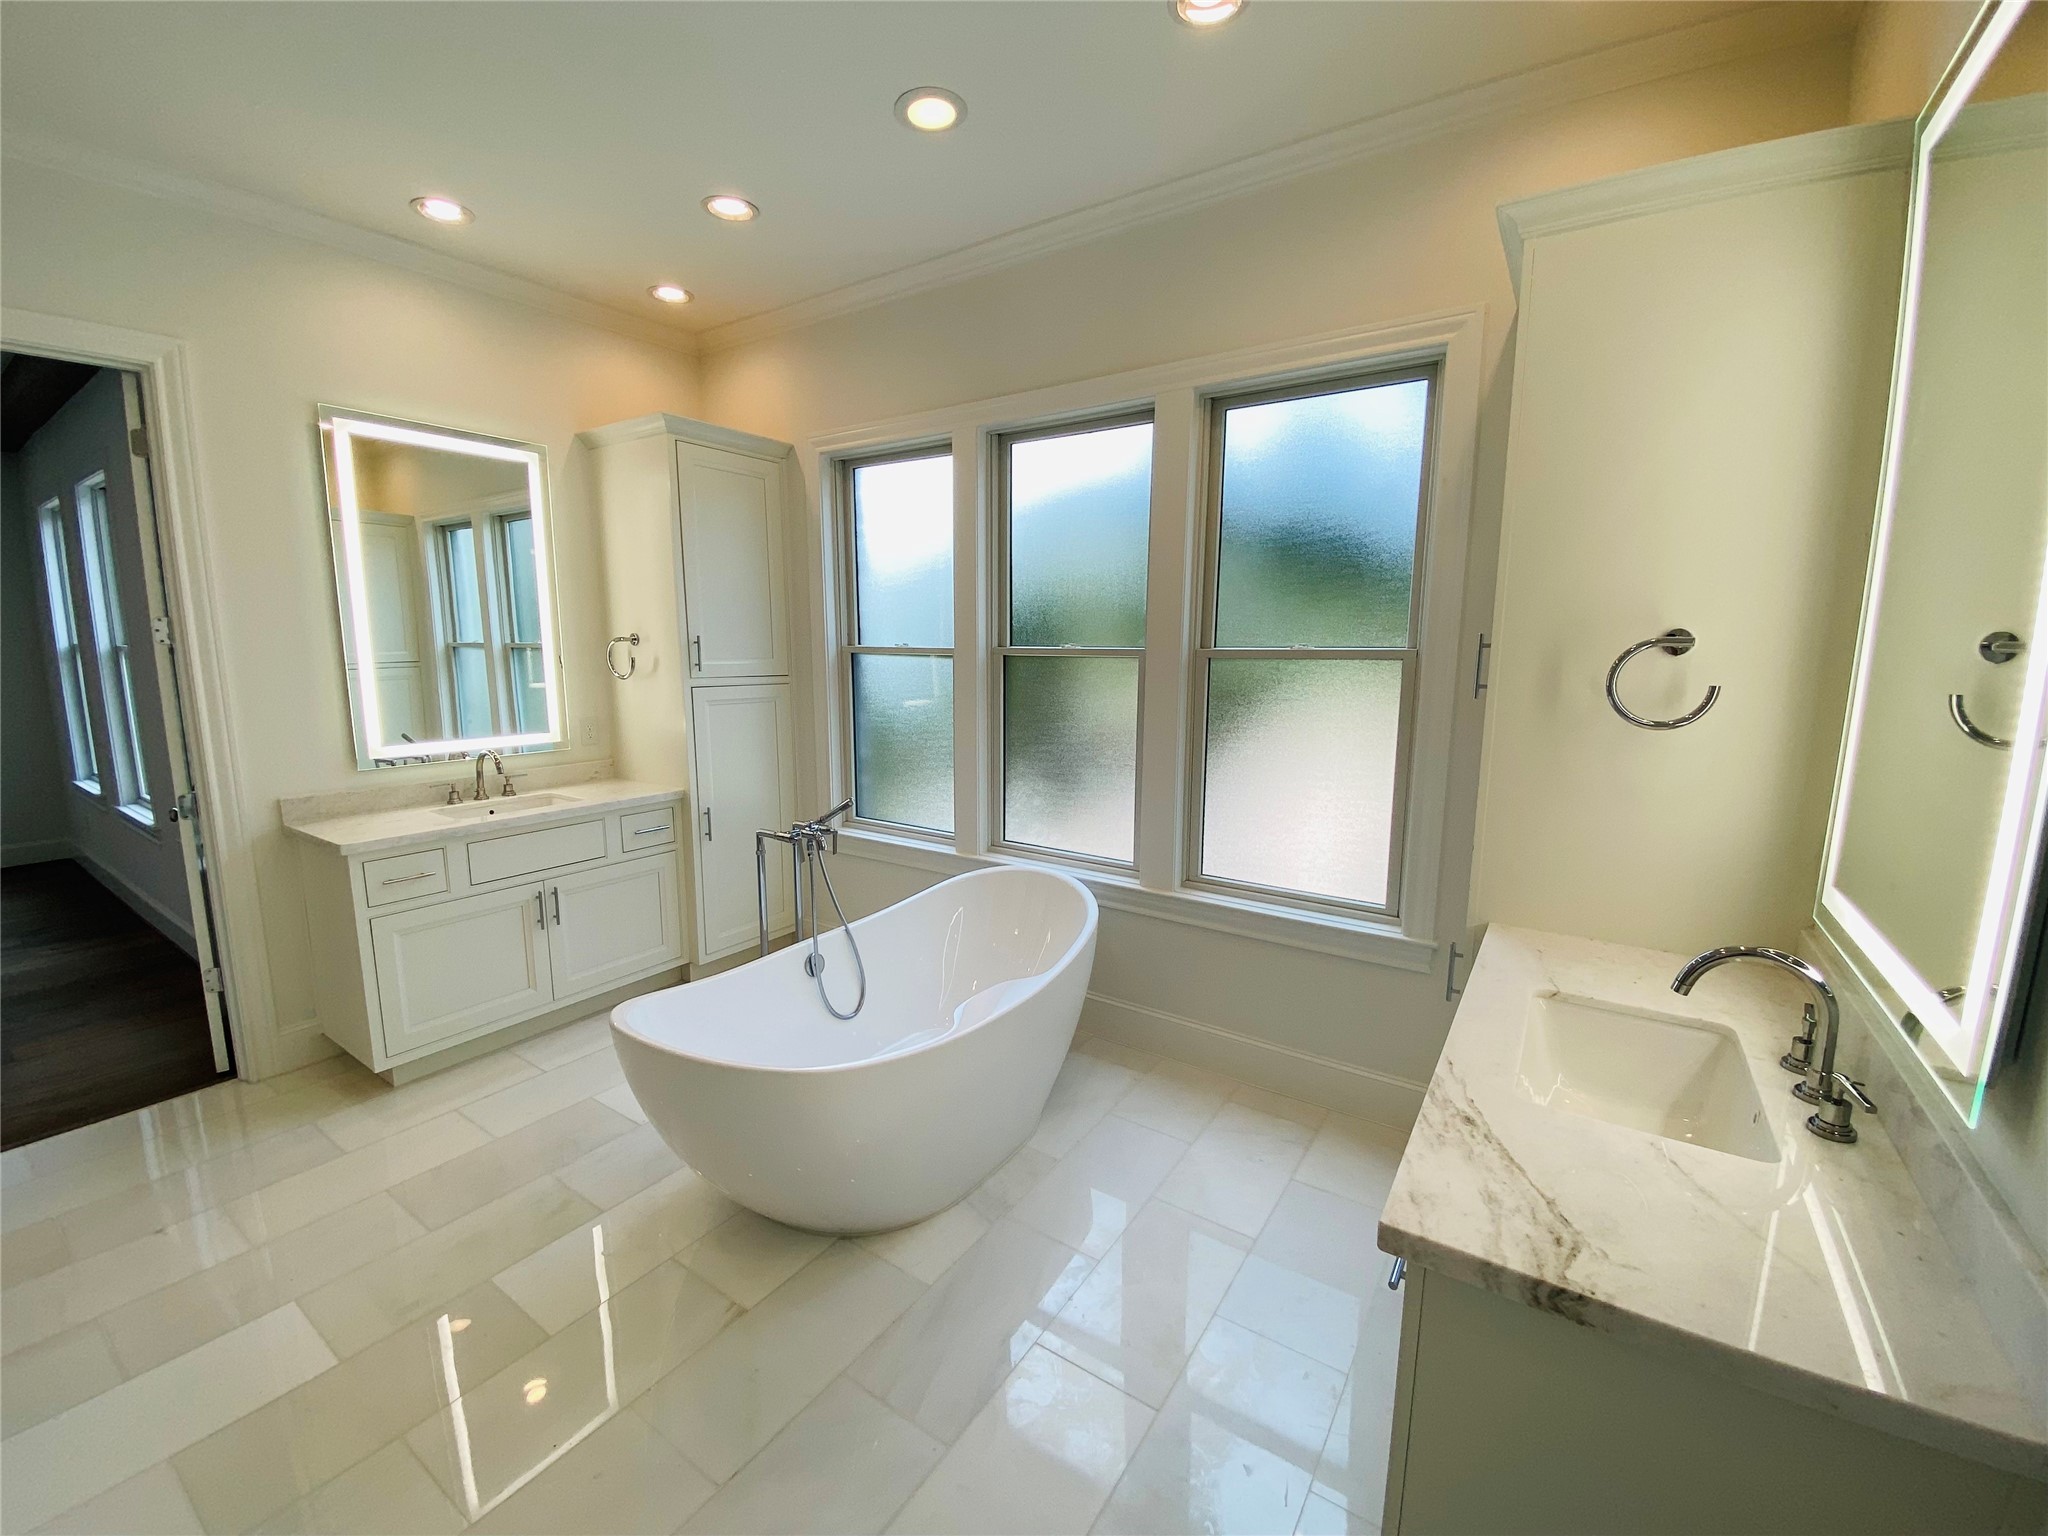 Luxurious primary bath with marble flooring & countertops, separate vanities, & free standing tub & separate shower